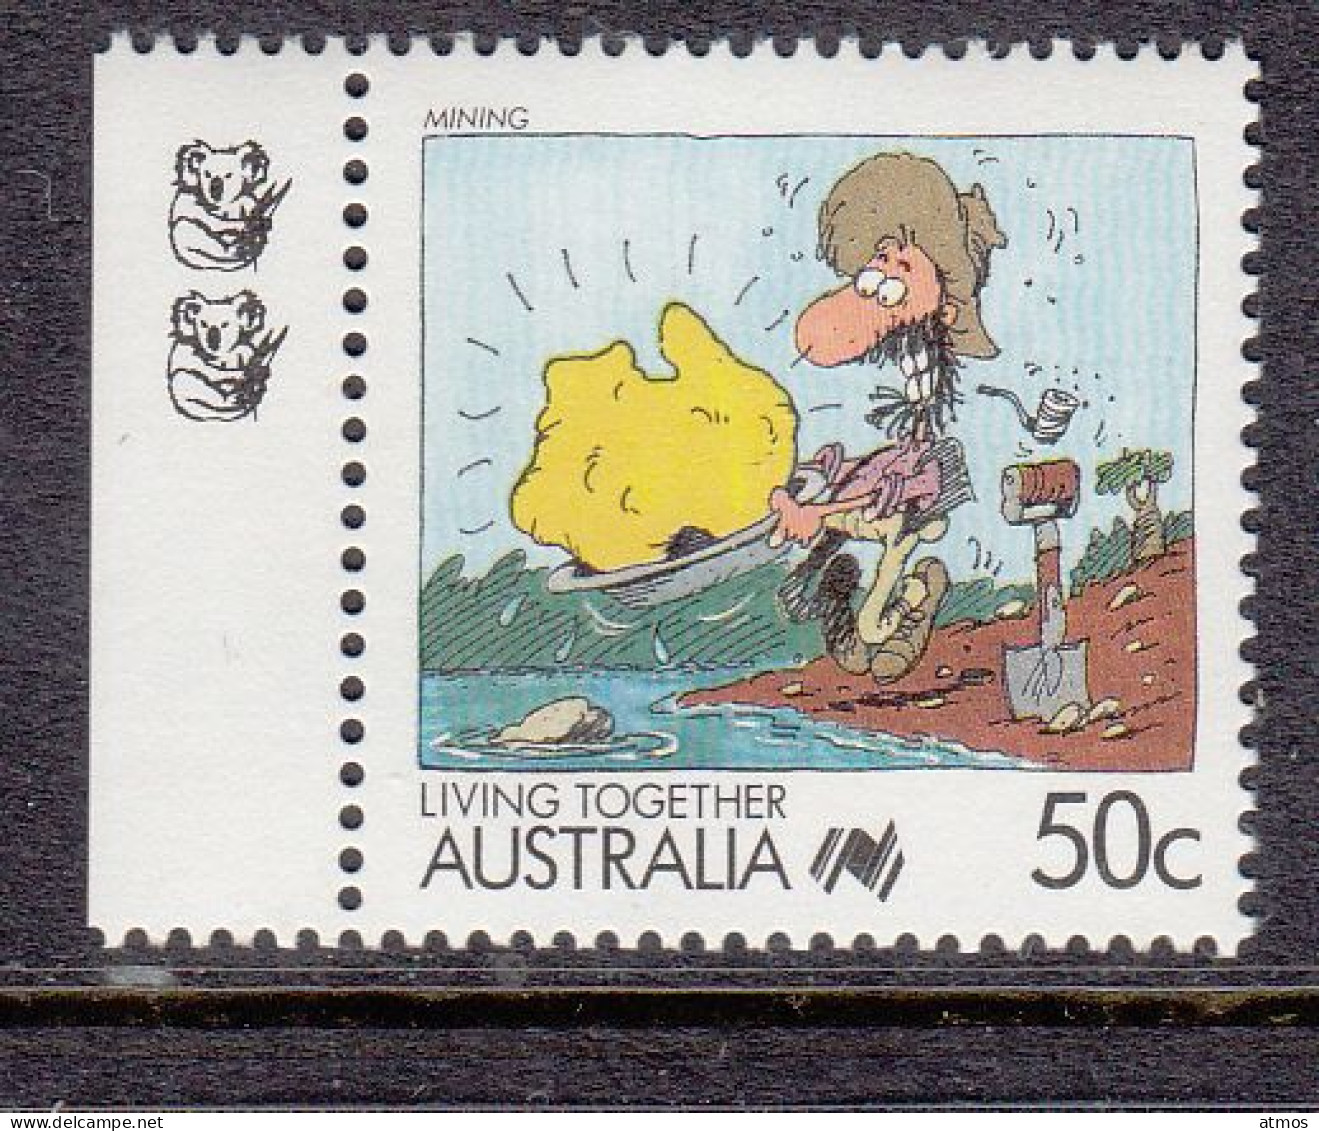 Australia MNH Michel Nr 1087 From 1988 Reprint 2 Koala - Neufs